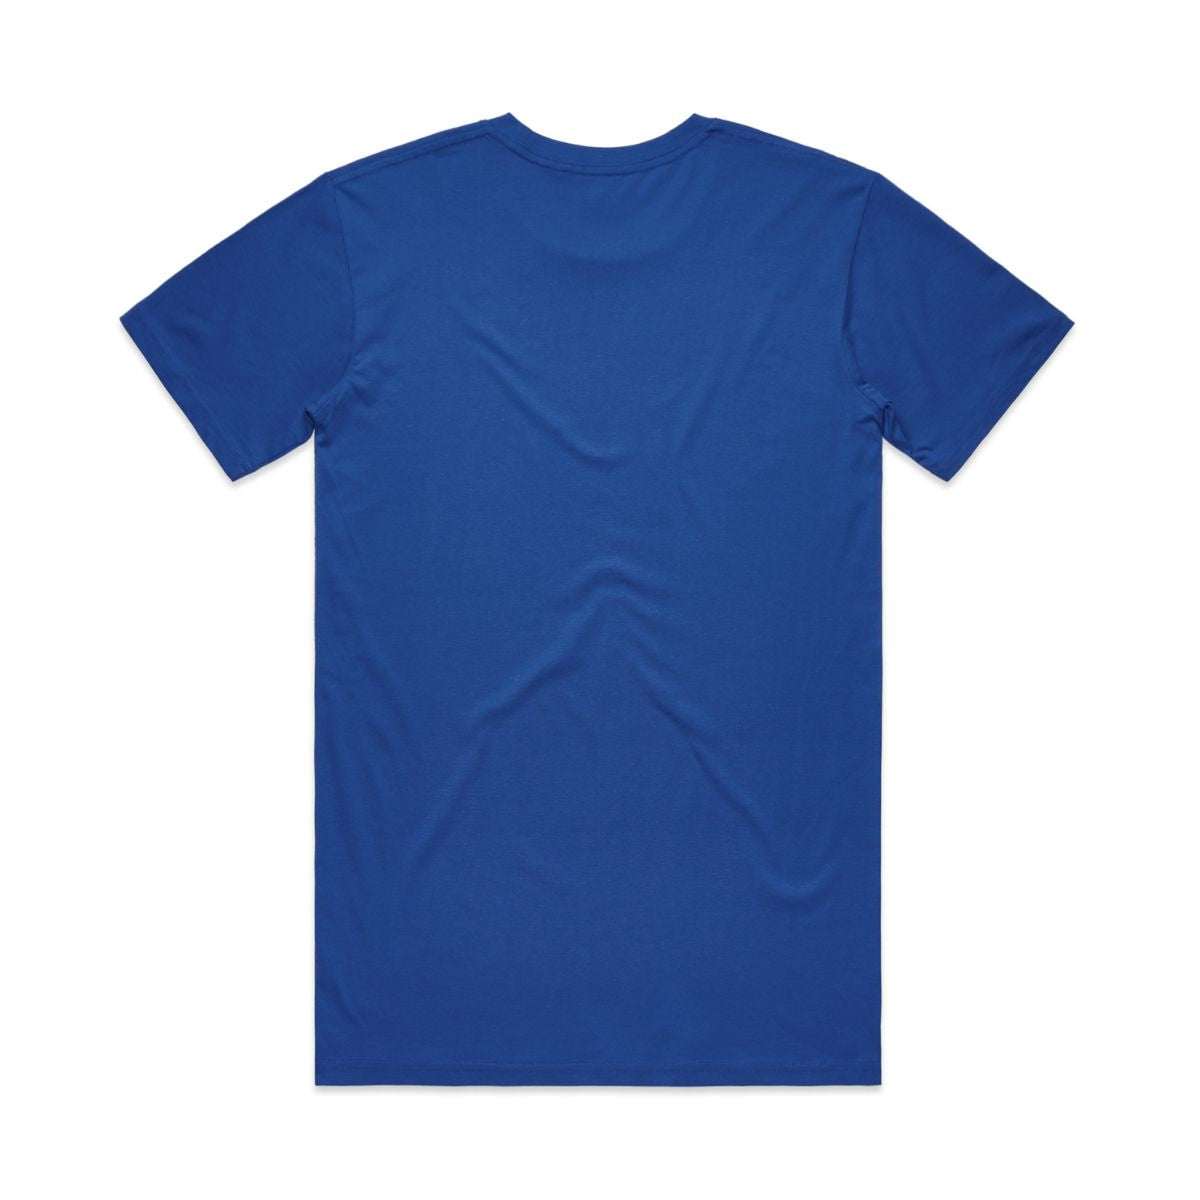 ascolour Men's Staple Tee - Blue Shades 5001